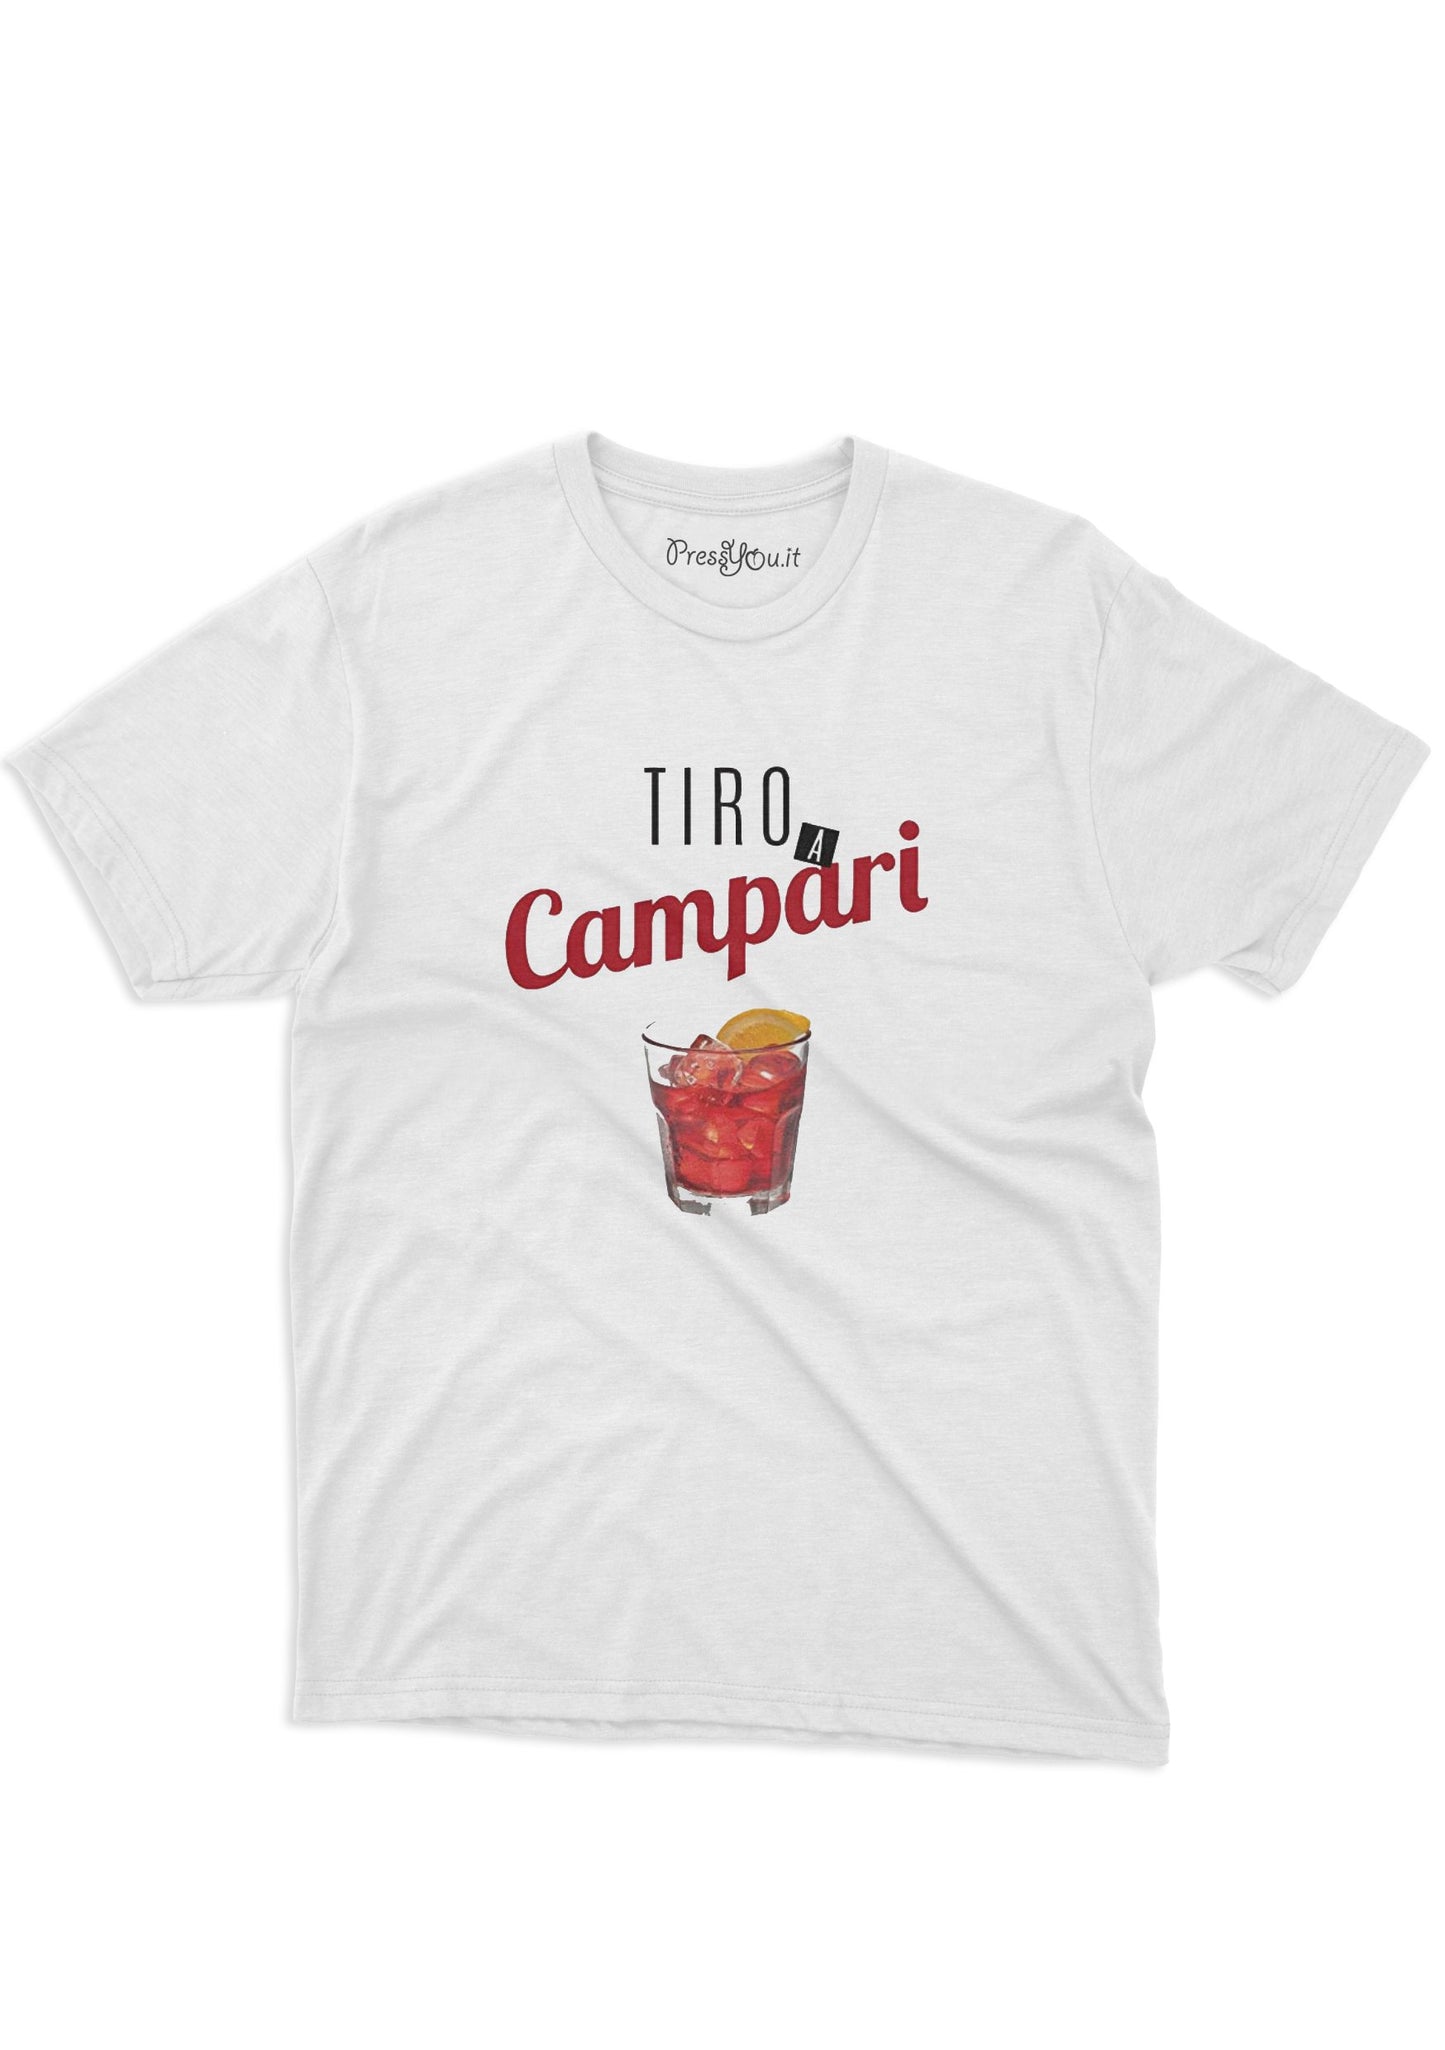 Campari shooting t-shirt